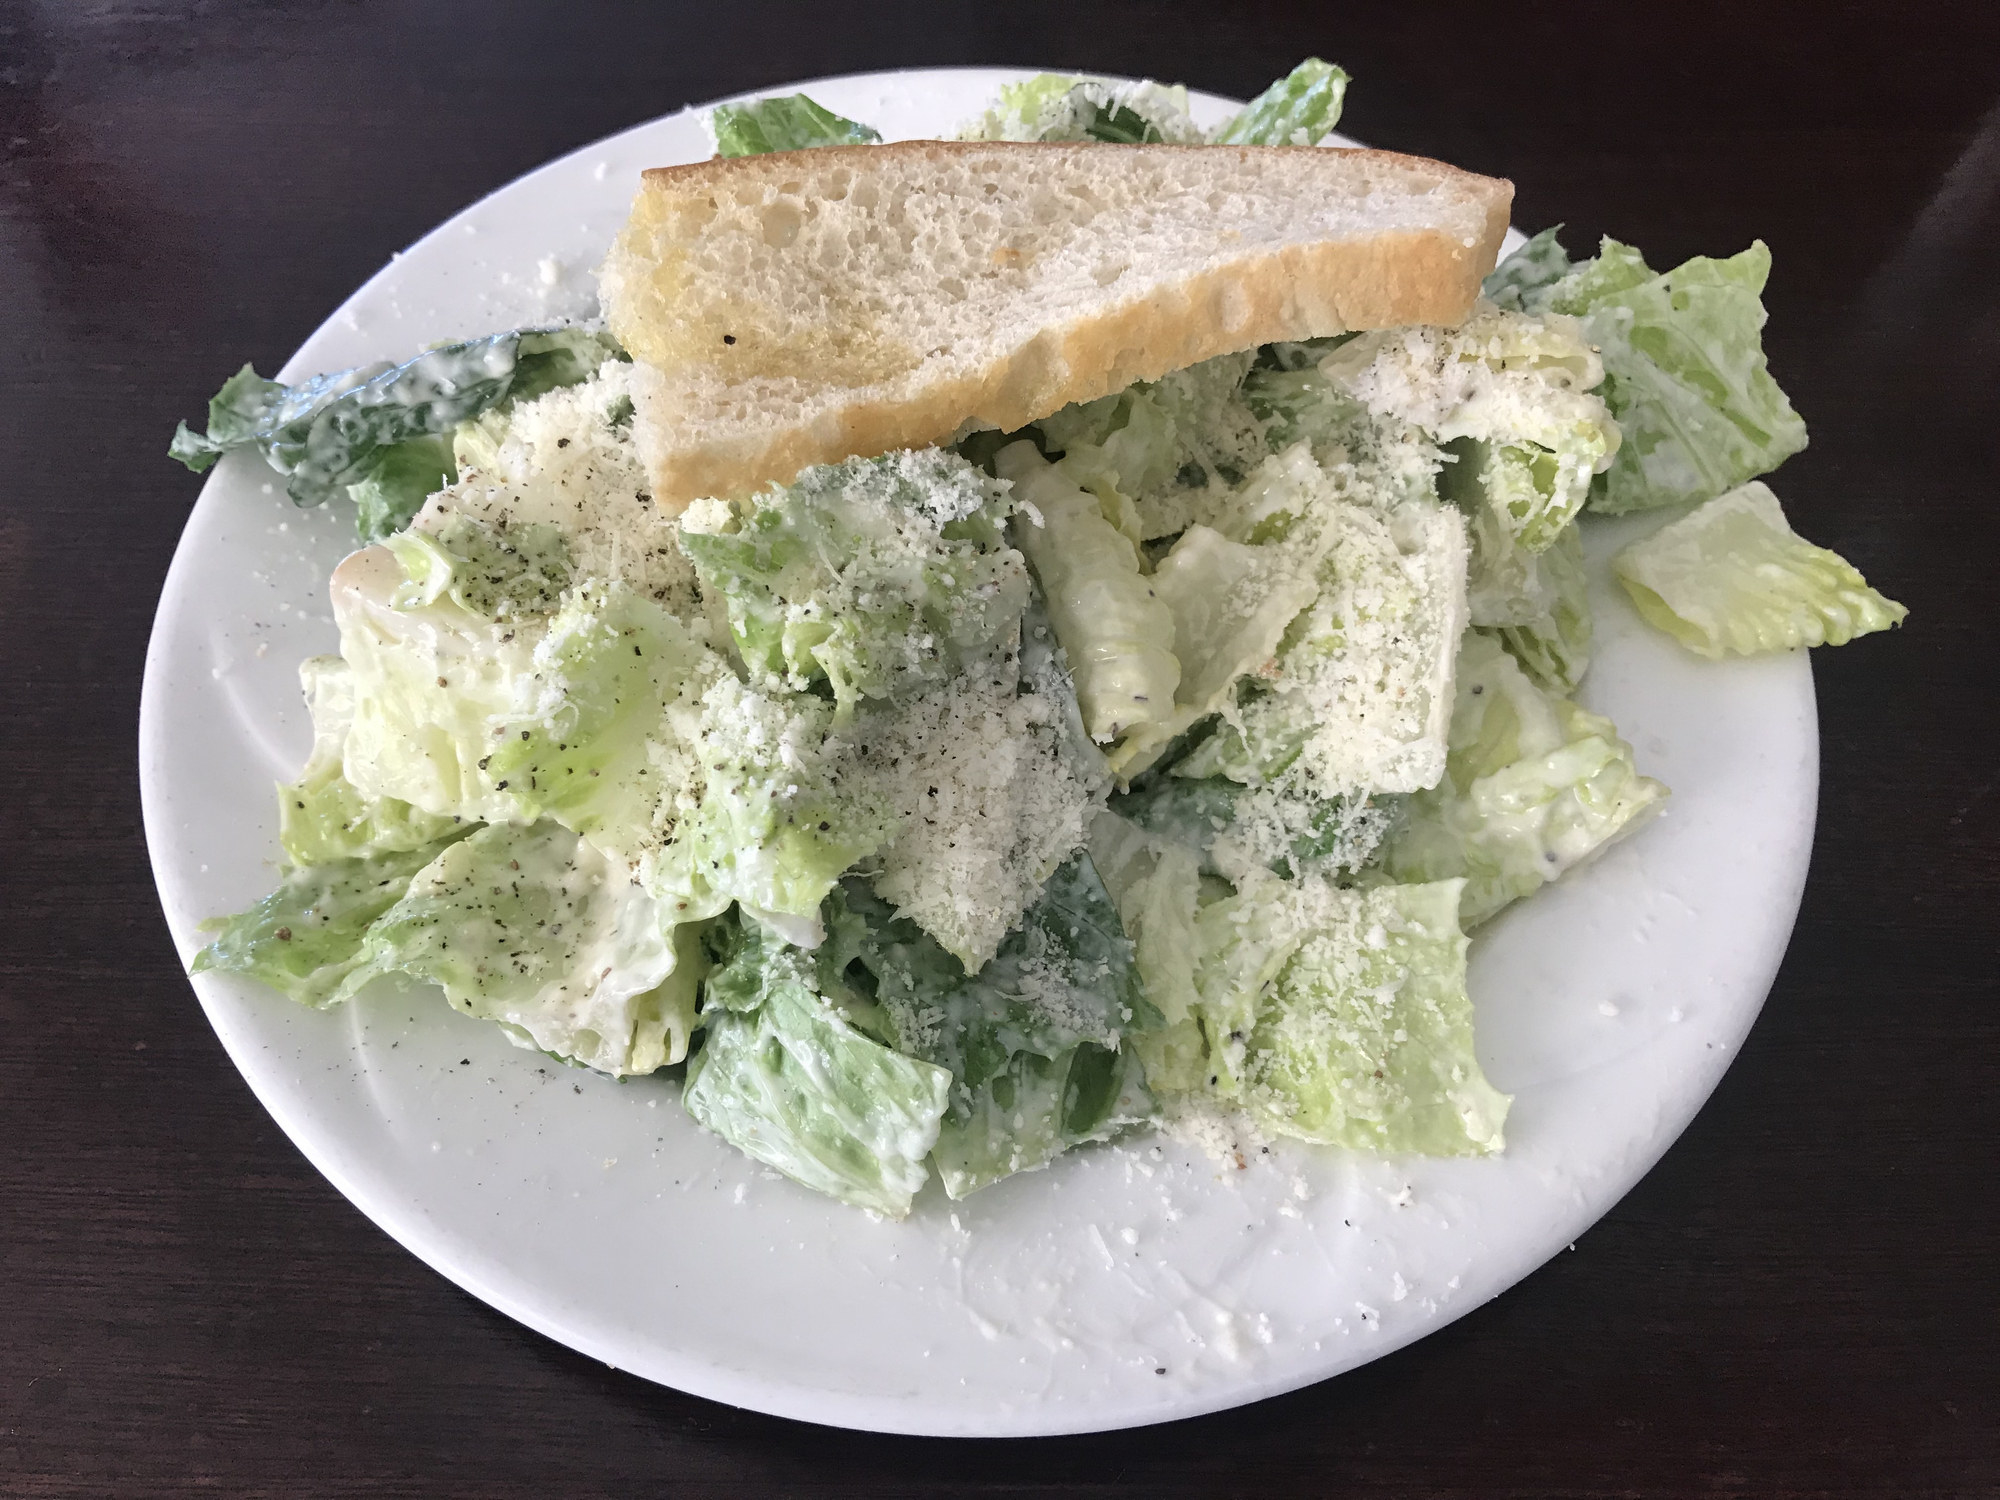 A homemade Caesar salad.